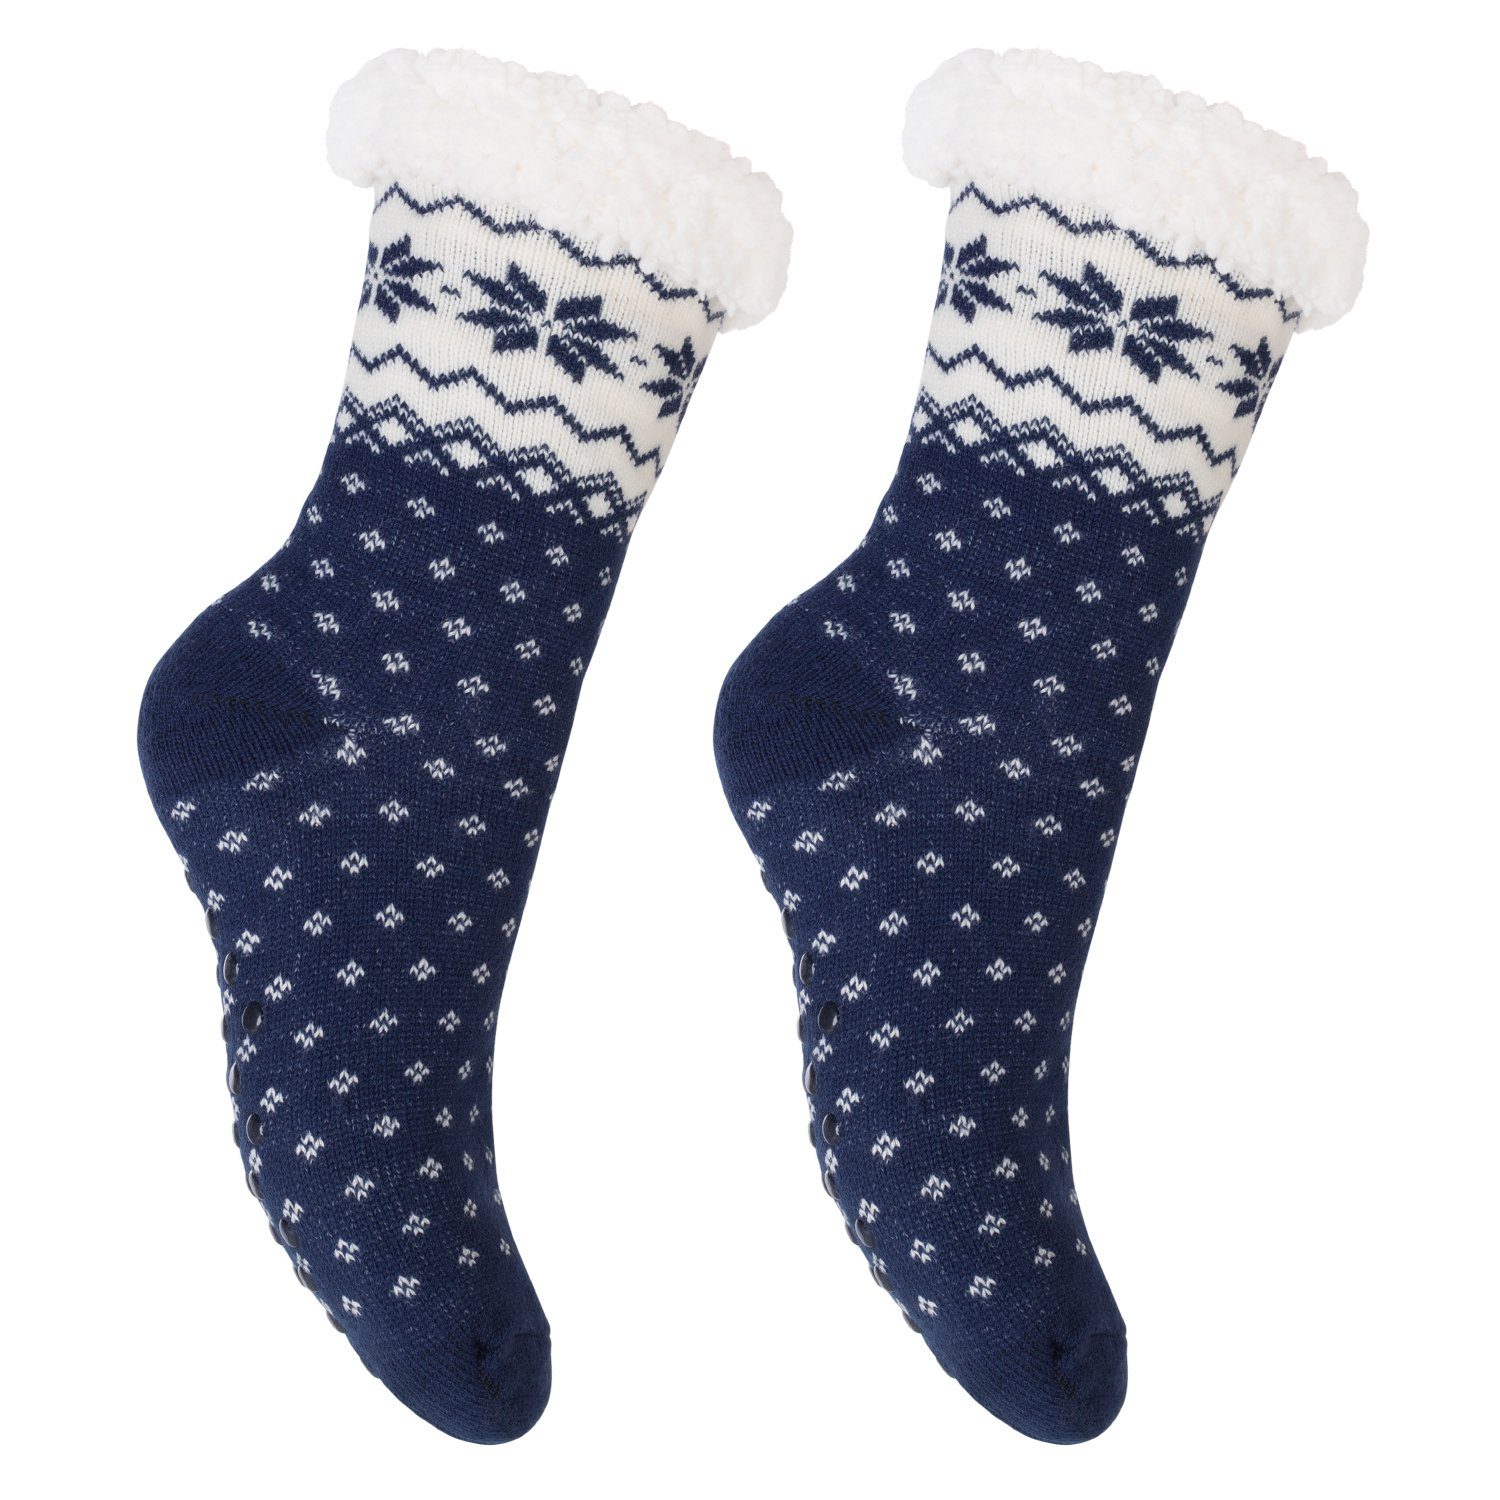 Footstar ABS-Socken Winter Haussocken für Damen & Herren (1/2 Paar) Kuschelsocken 2 x Blau | Stoppersocken